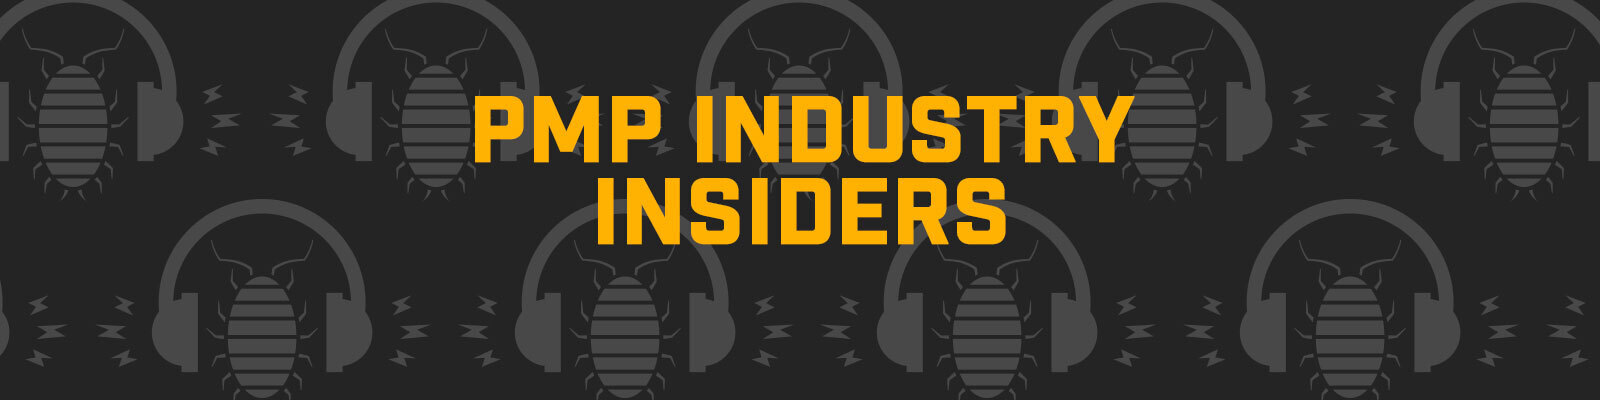 PMP Industry Insiders